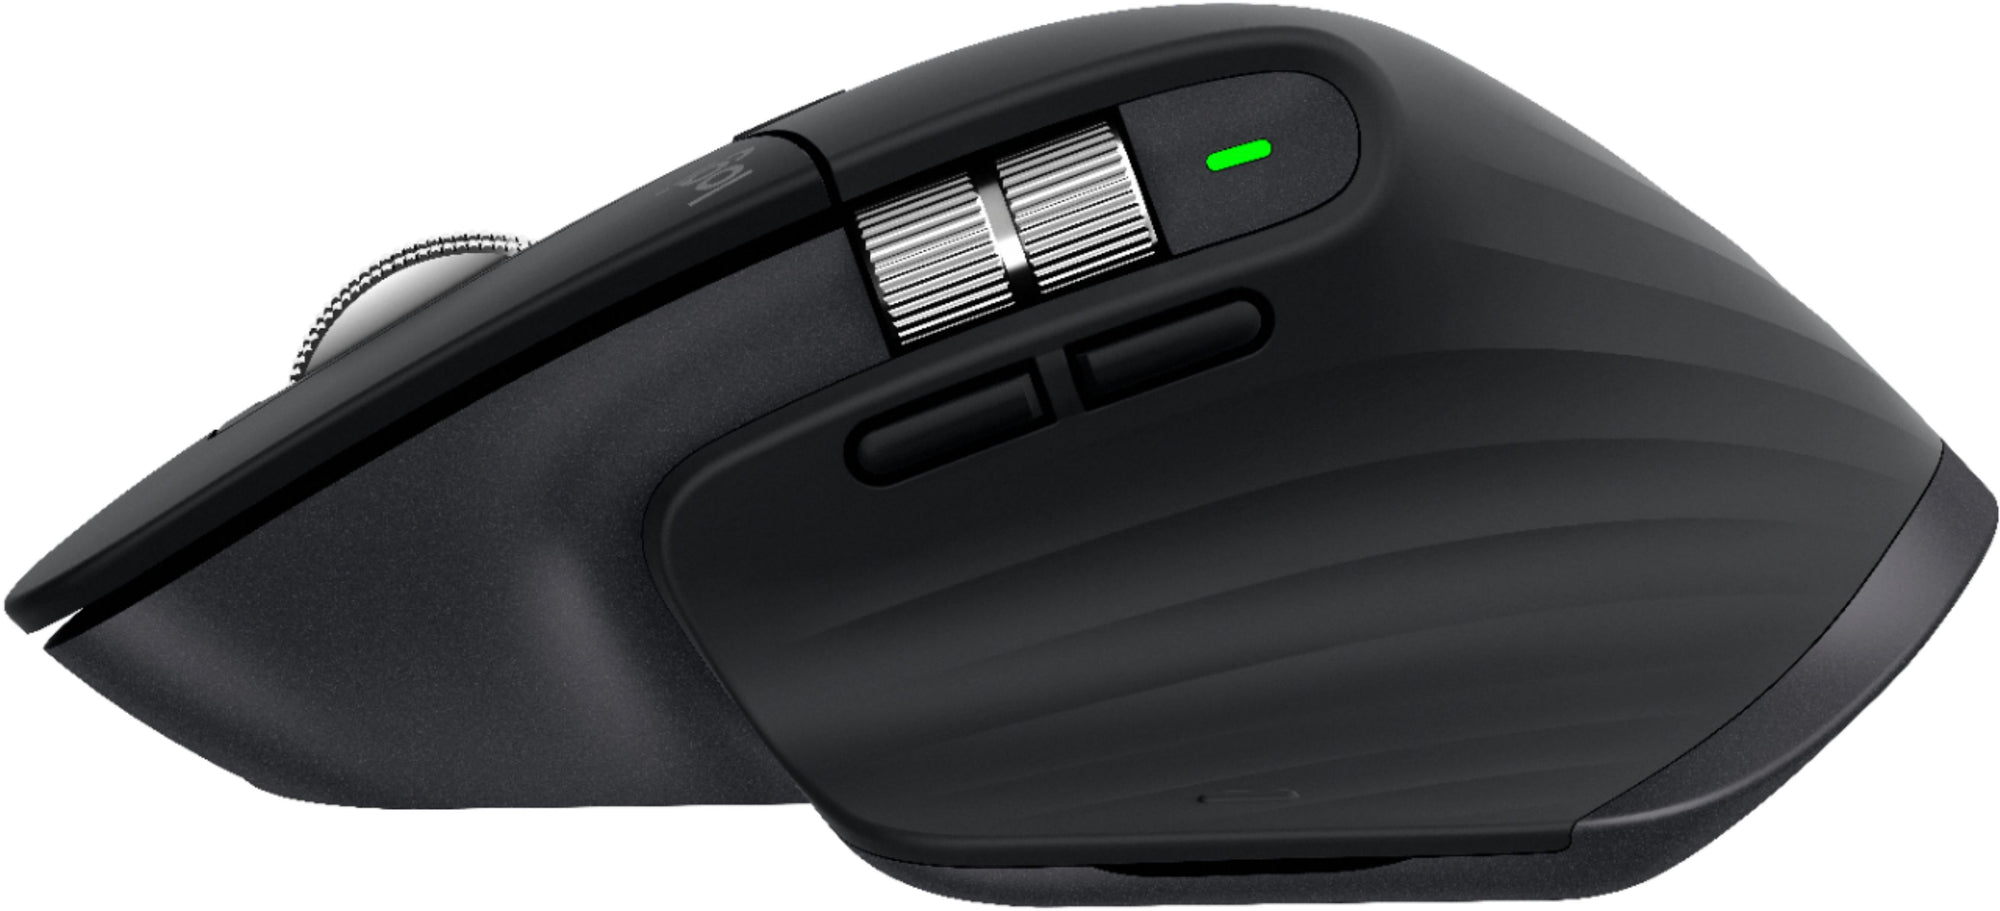 Logitech - 910-005647 MX Master 3 Advanced Wireless USB/Bluetooth Laser Mouse with Ultrafast Scrolling  - Black